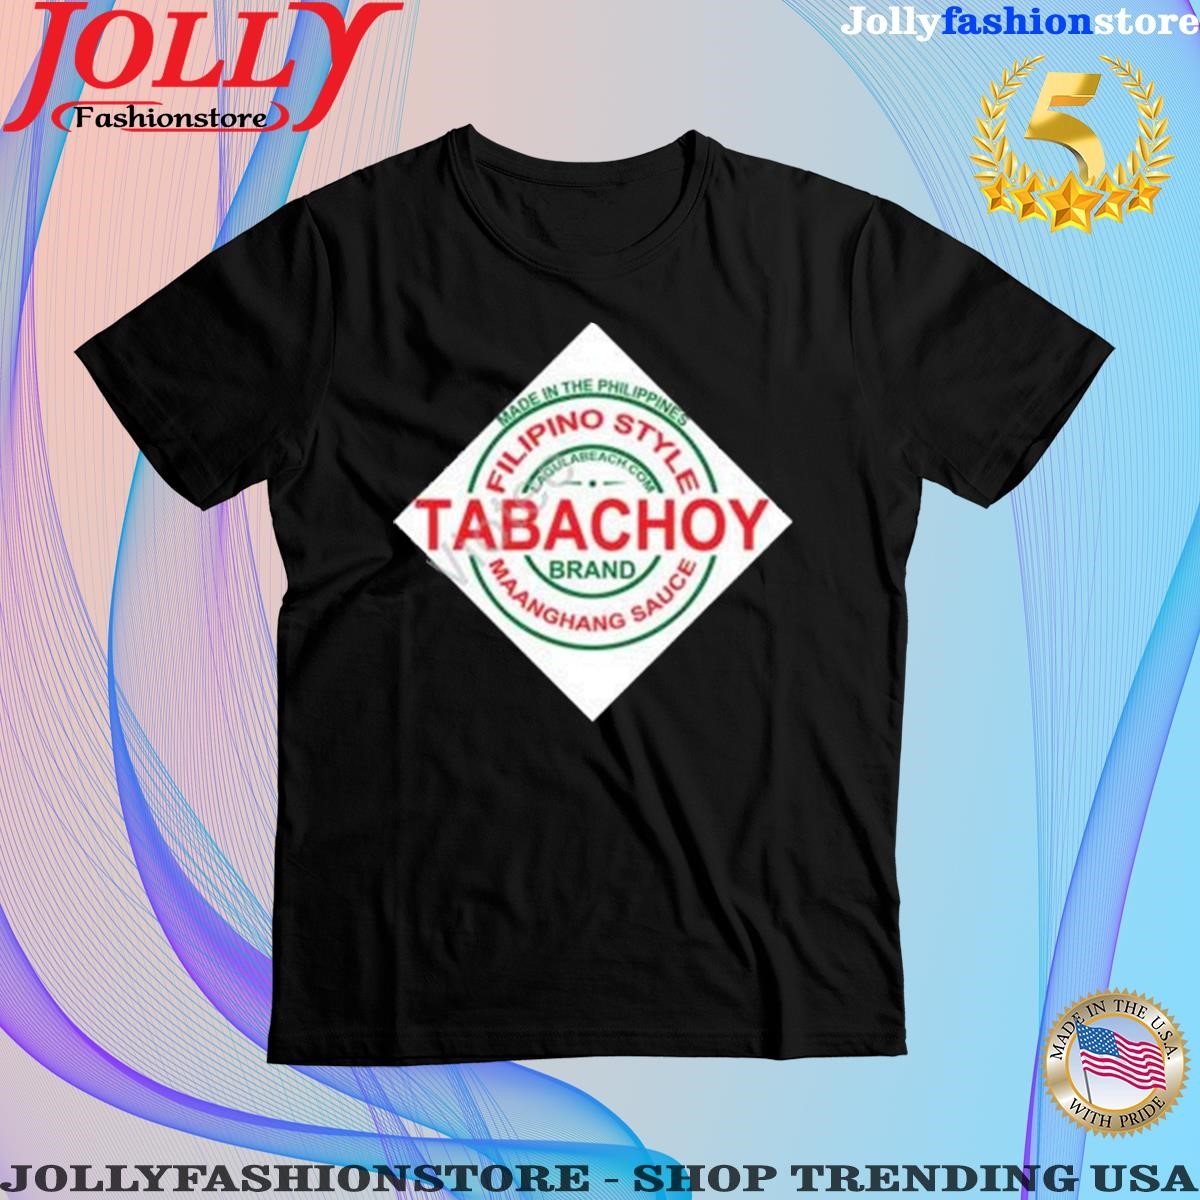 Tabachoy filipino style maanchang brand shirt